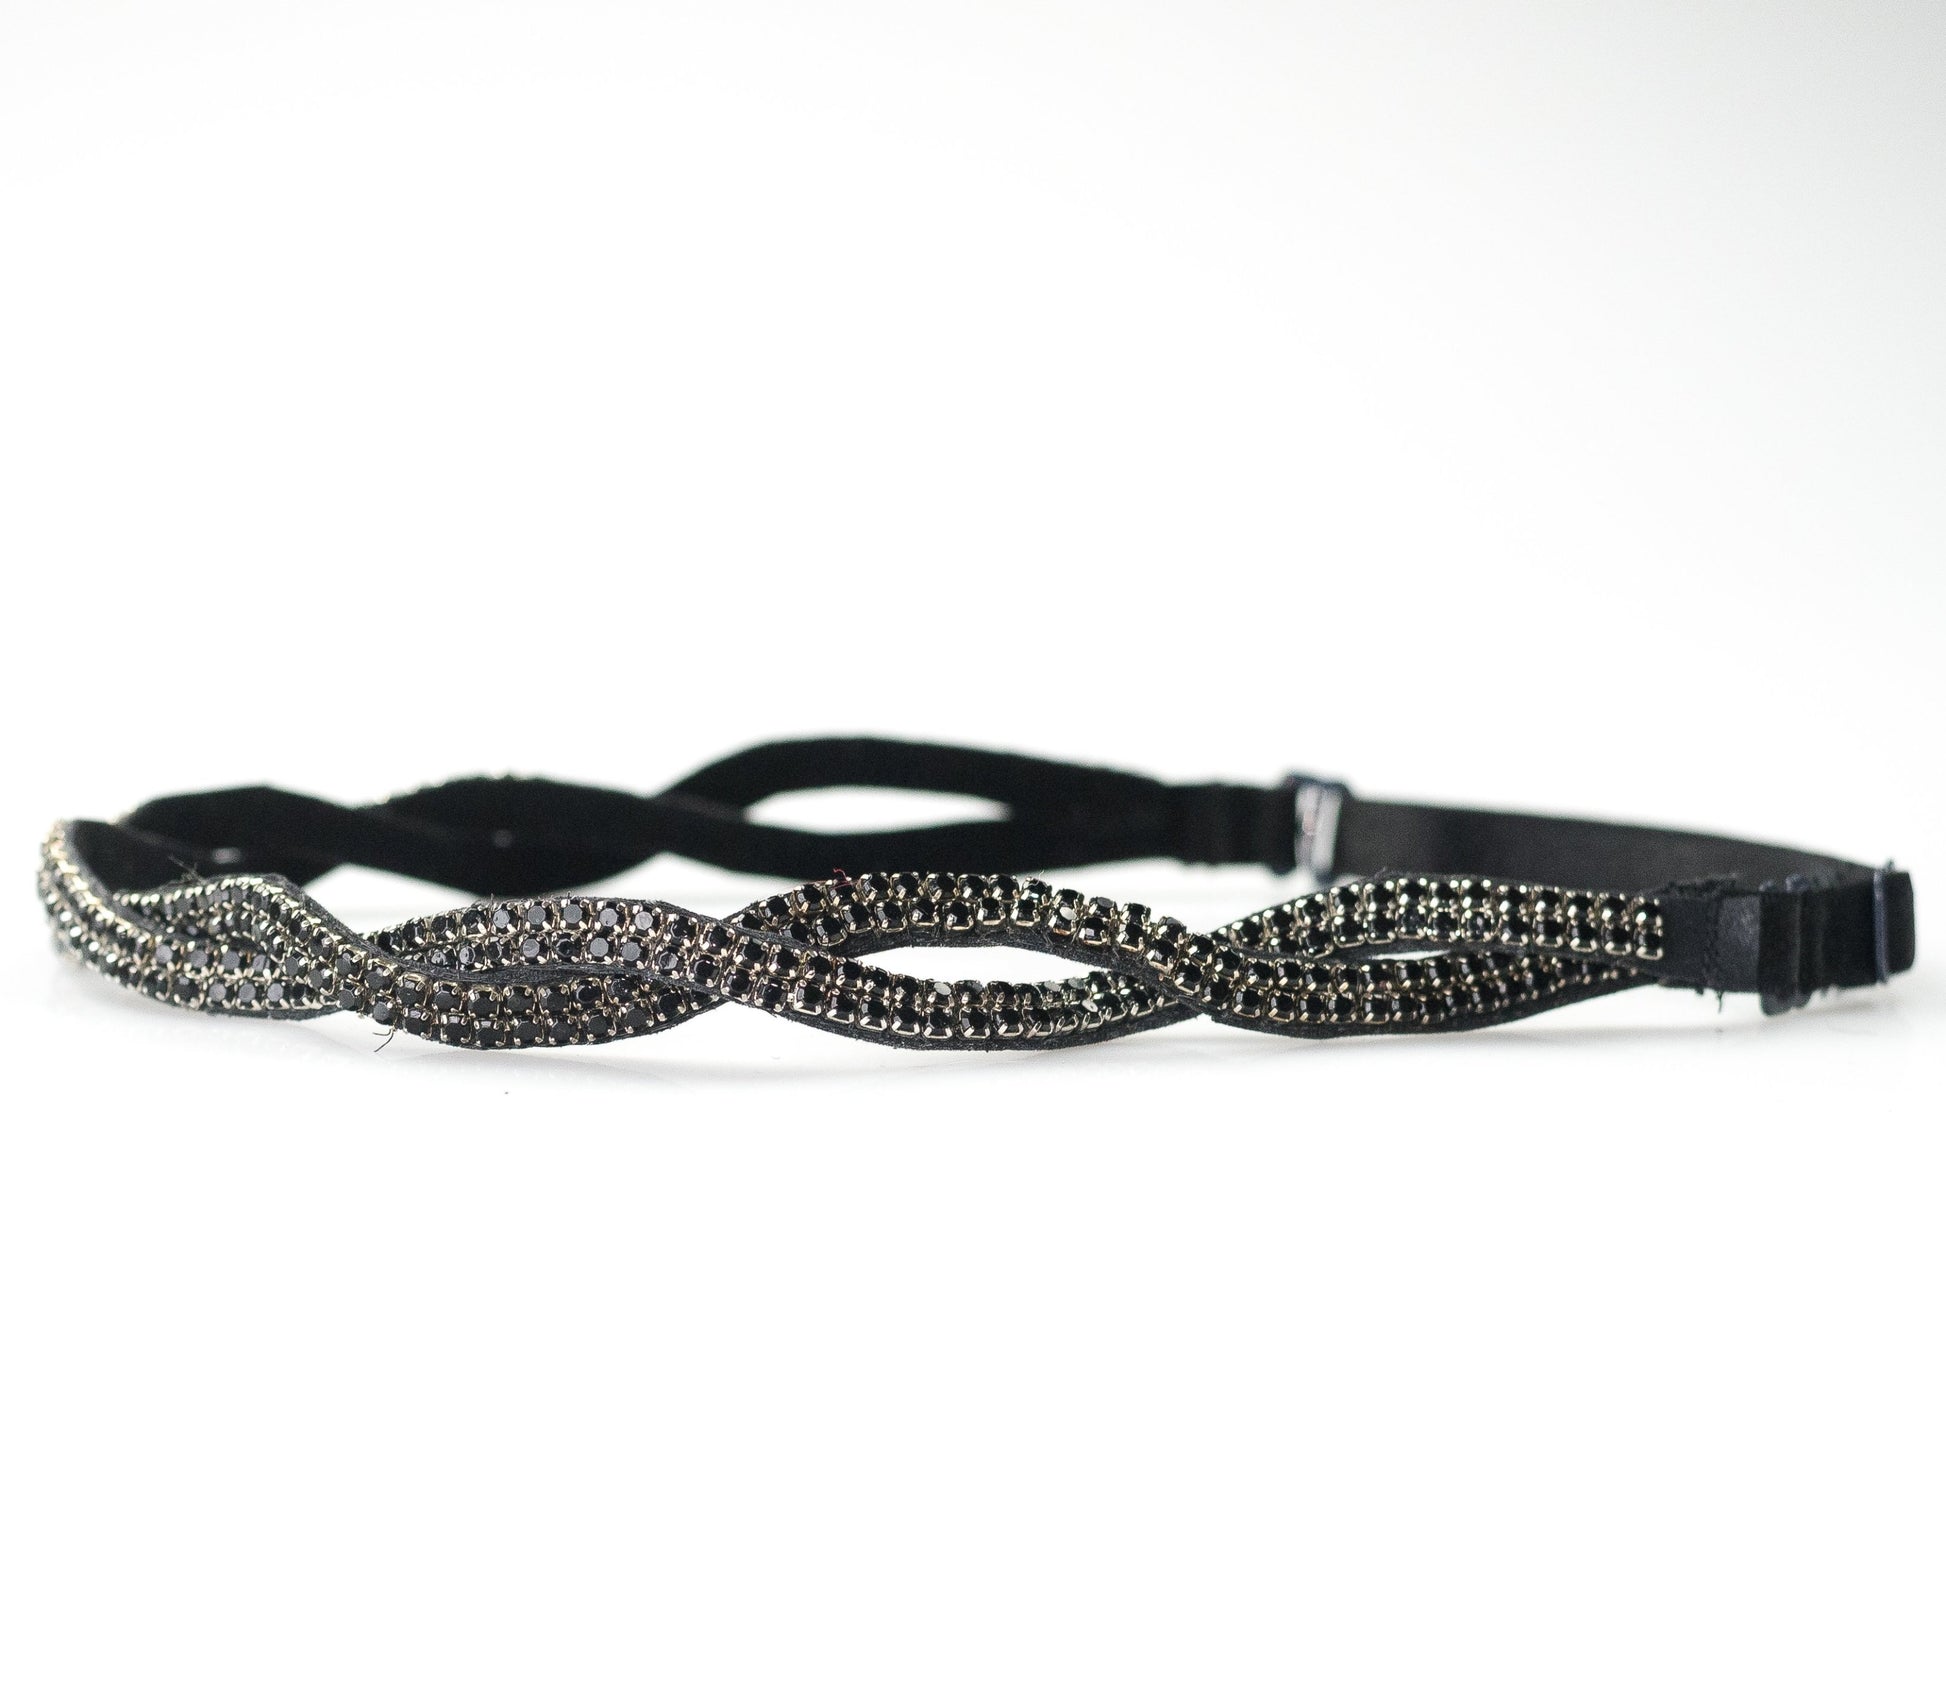 Black bead twisted braid hat band with adjustable elastic